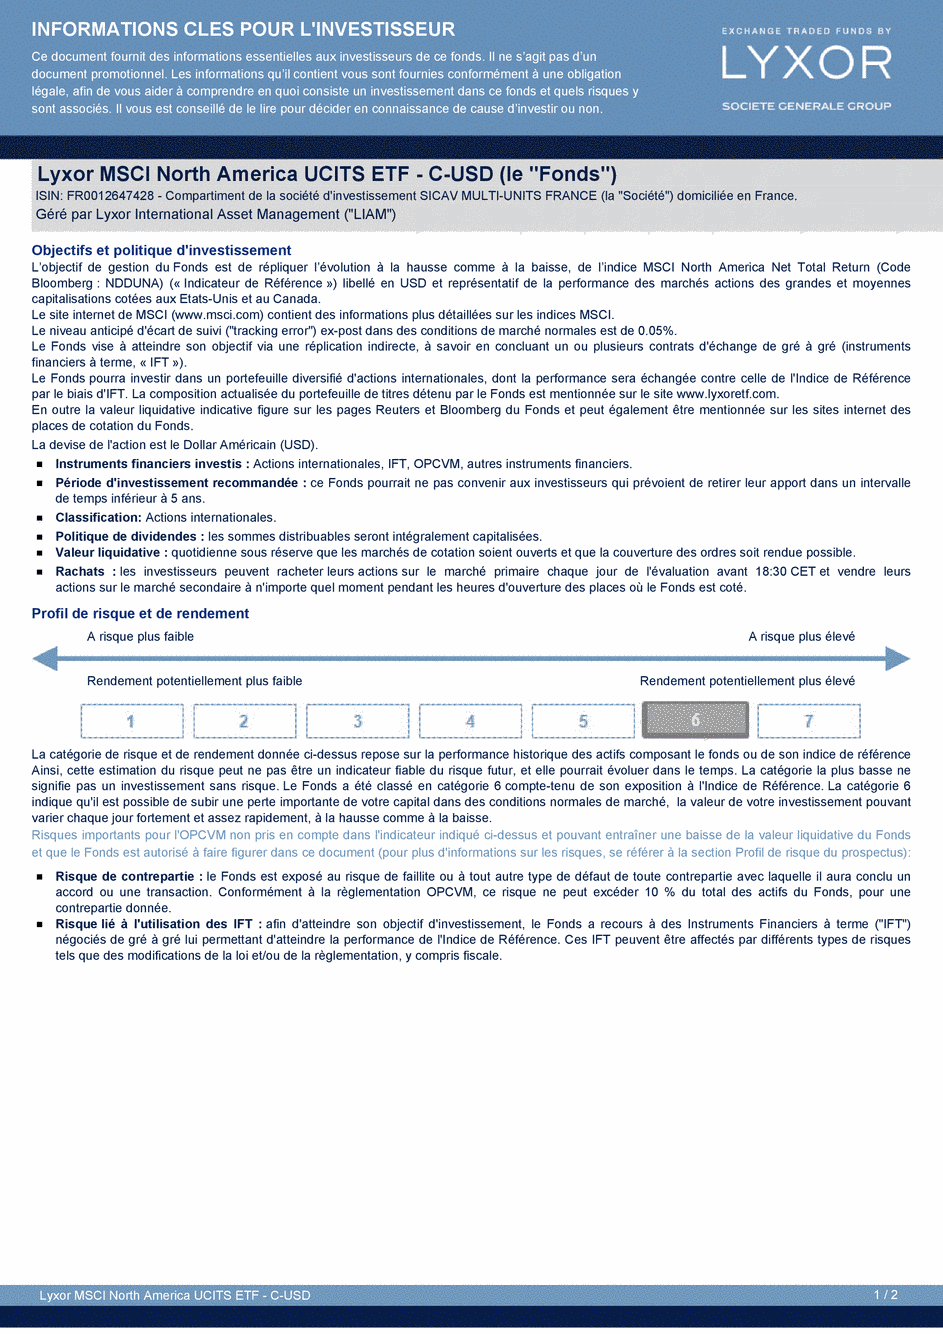 DICI LYXOR MSCI NORTH AMERICA UCITS ETF C-USD - 26/03/2015 - Français